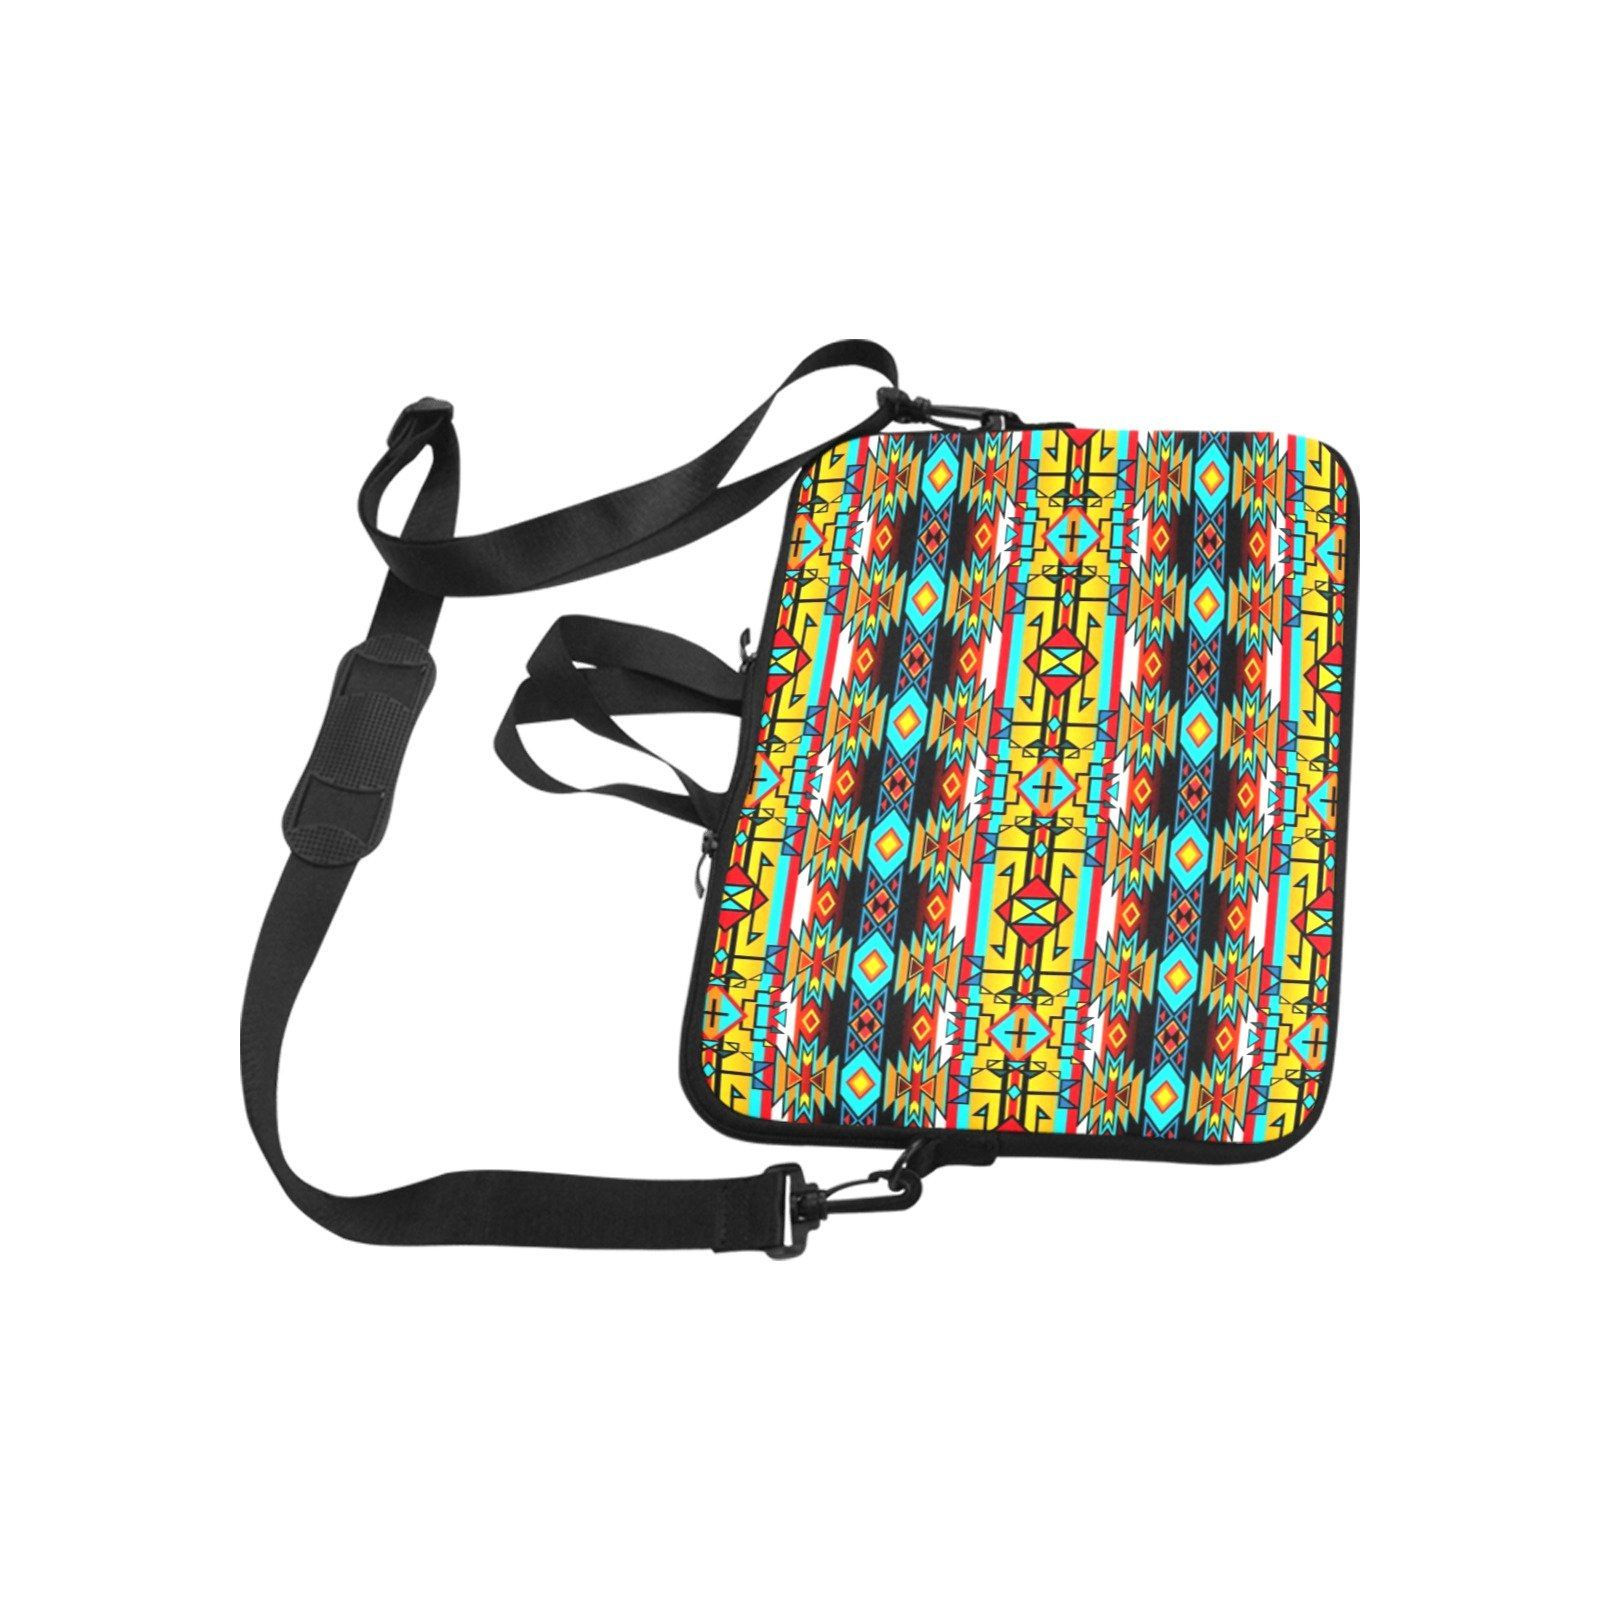 Force of Nature Twister Laptop Handbags 10" bag e-joyer 